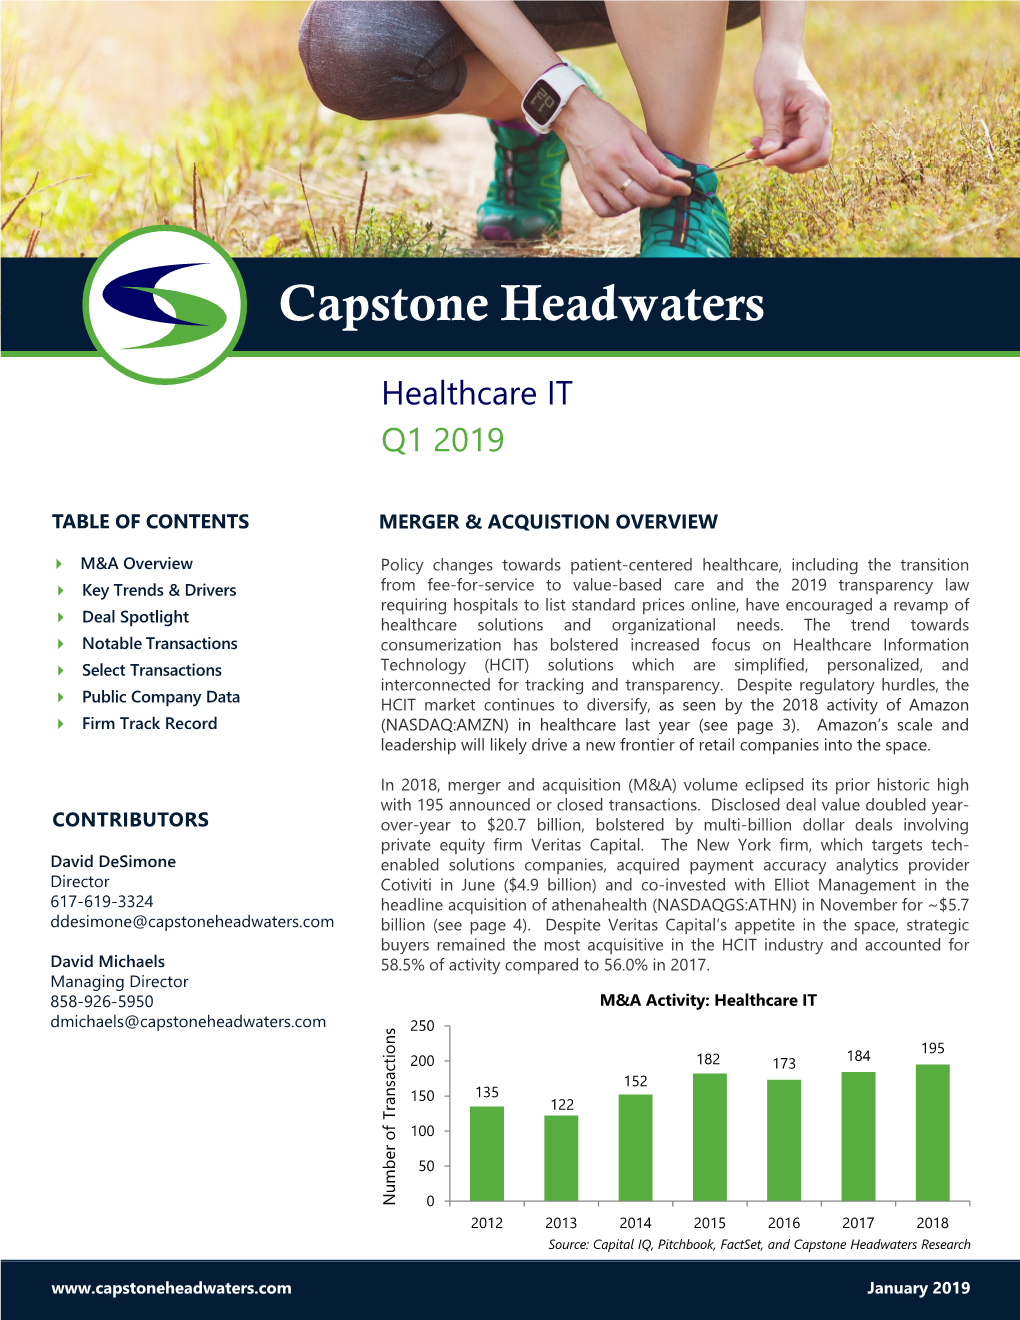 Capstone Headwaters Healthcare IT M&A Coverage Report Q1 2019